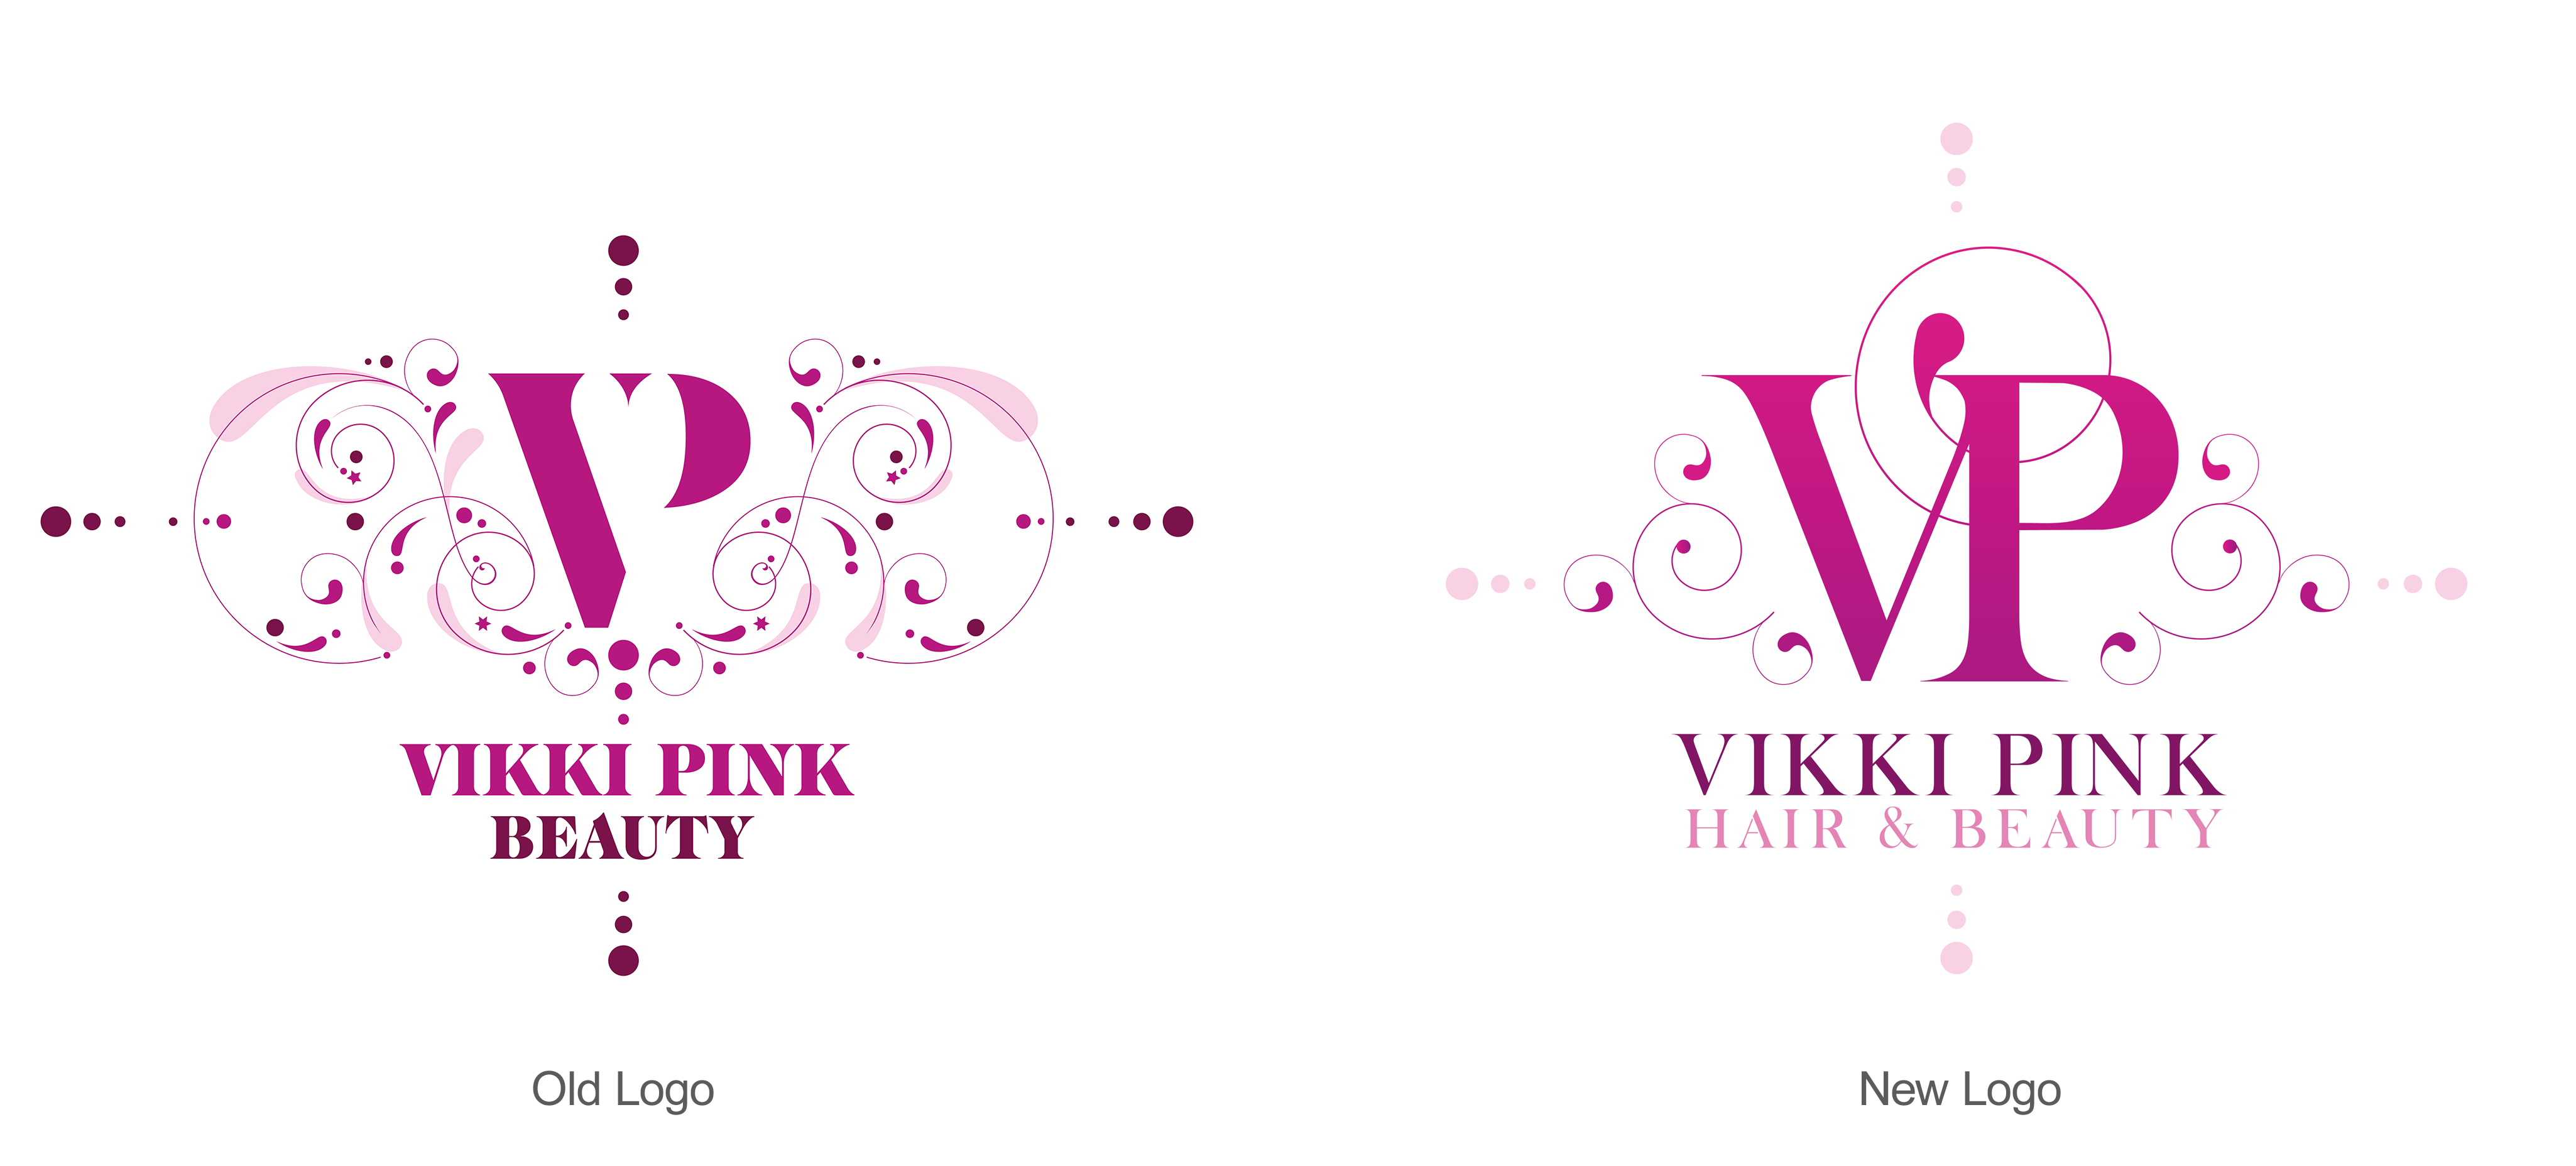 Vikki Pink Logo